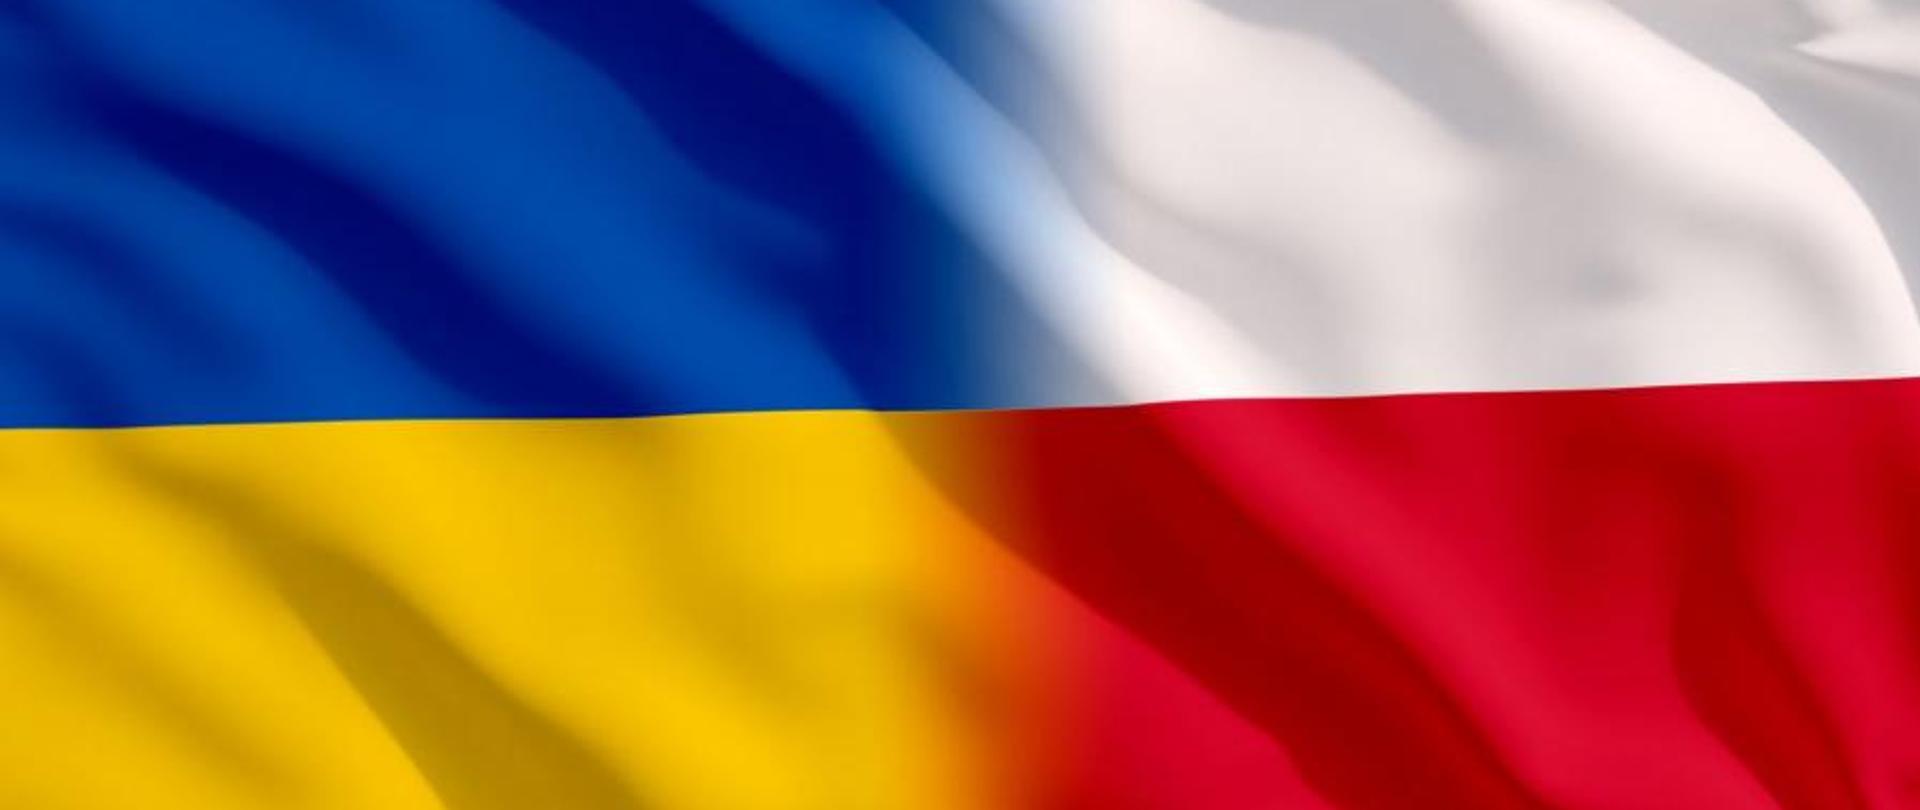 Baner flaga Ukrainy i Polski